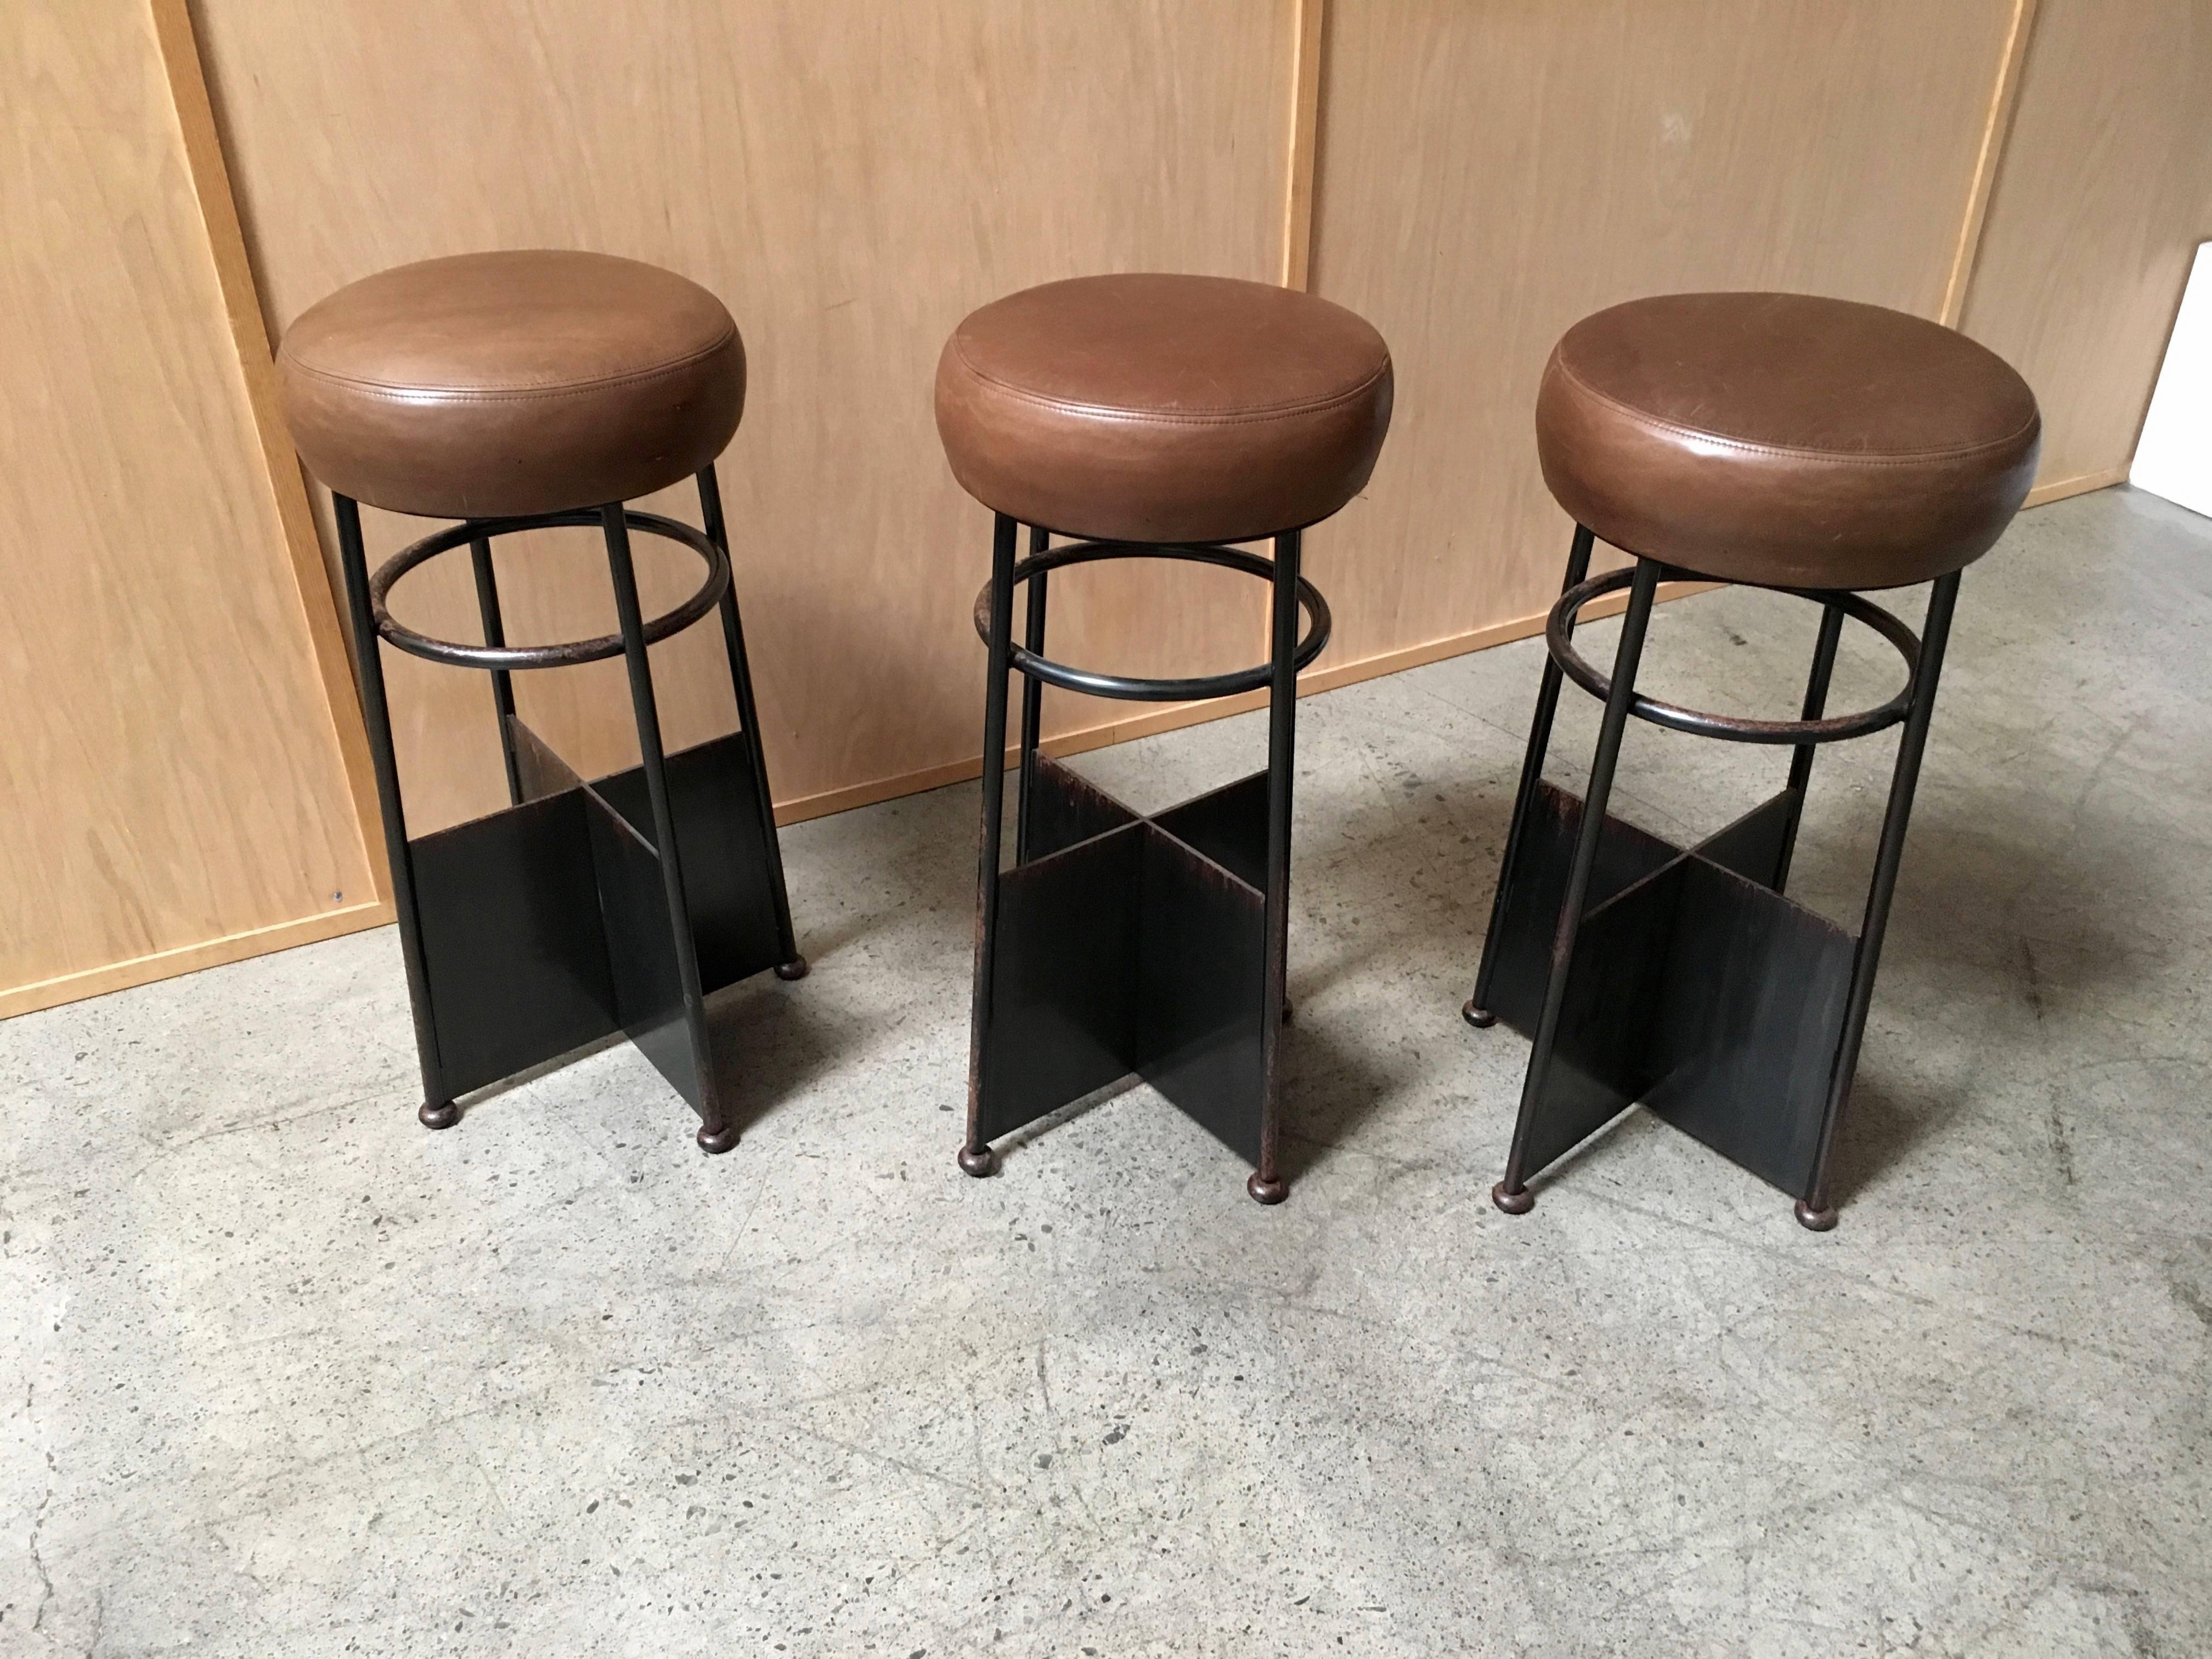 Set of three vintage iron with leather bar stools.